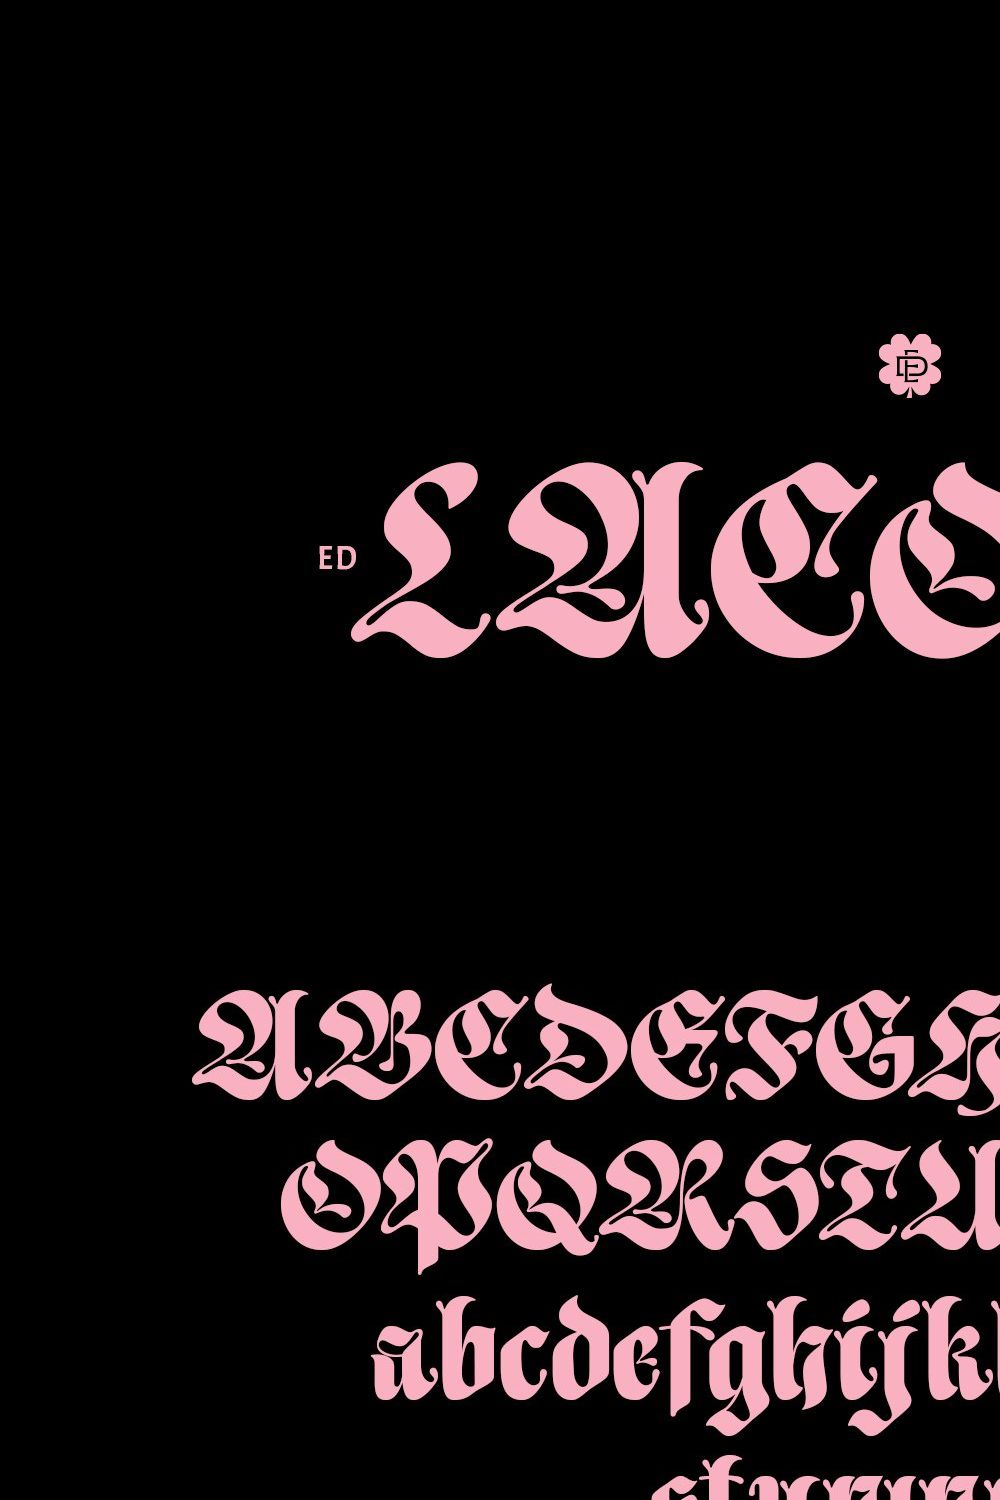 ED Lacour - Blackletter Typeface pinterest preview image.